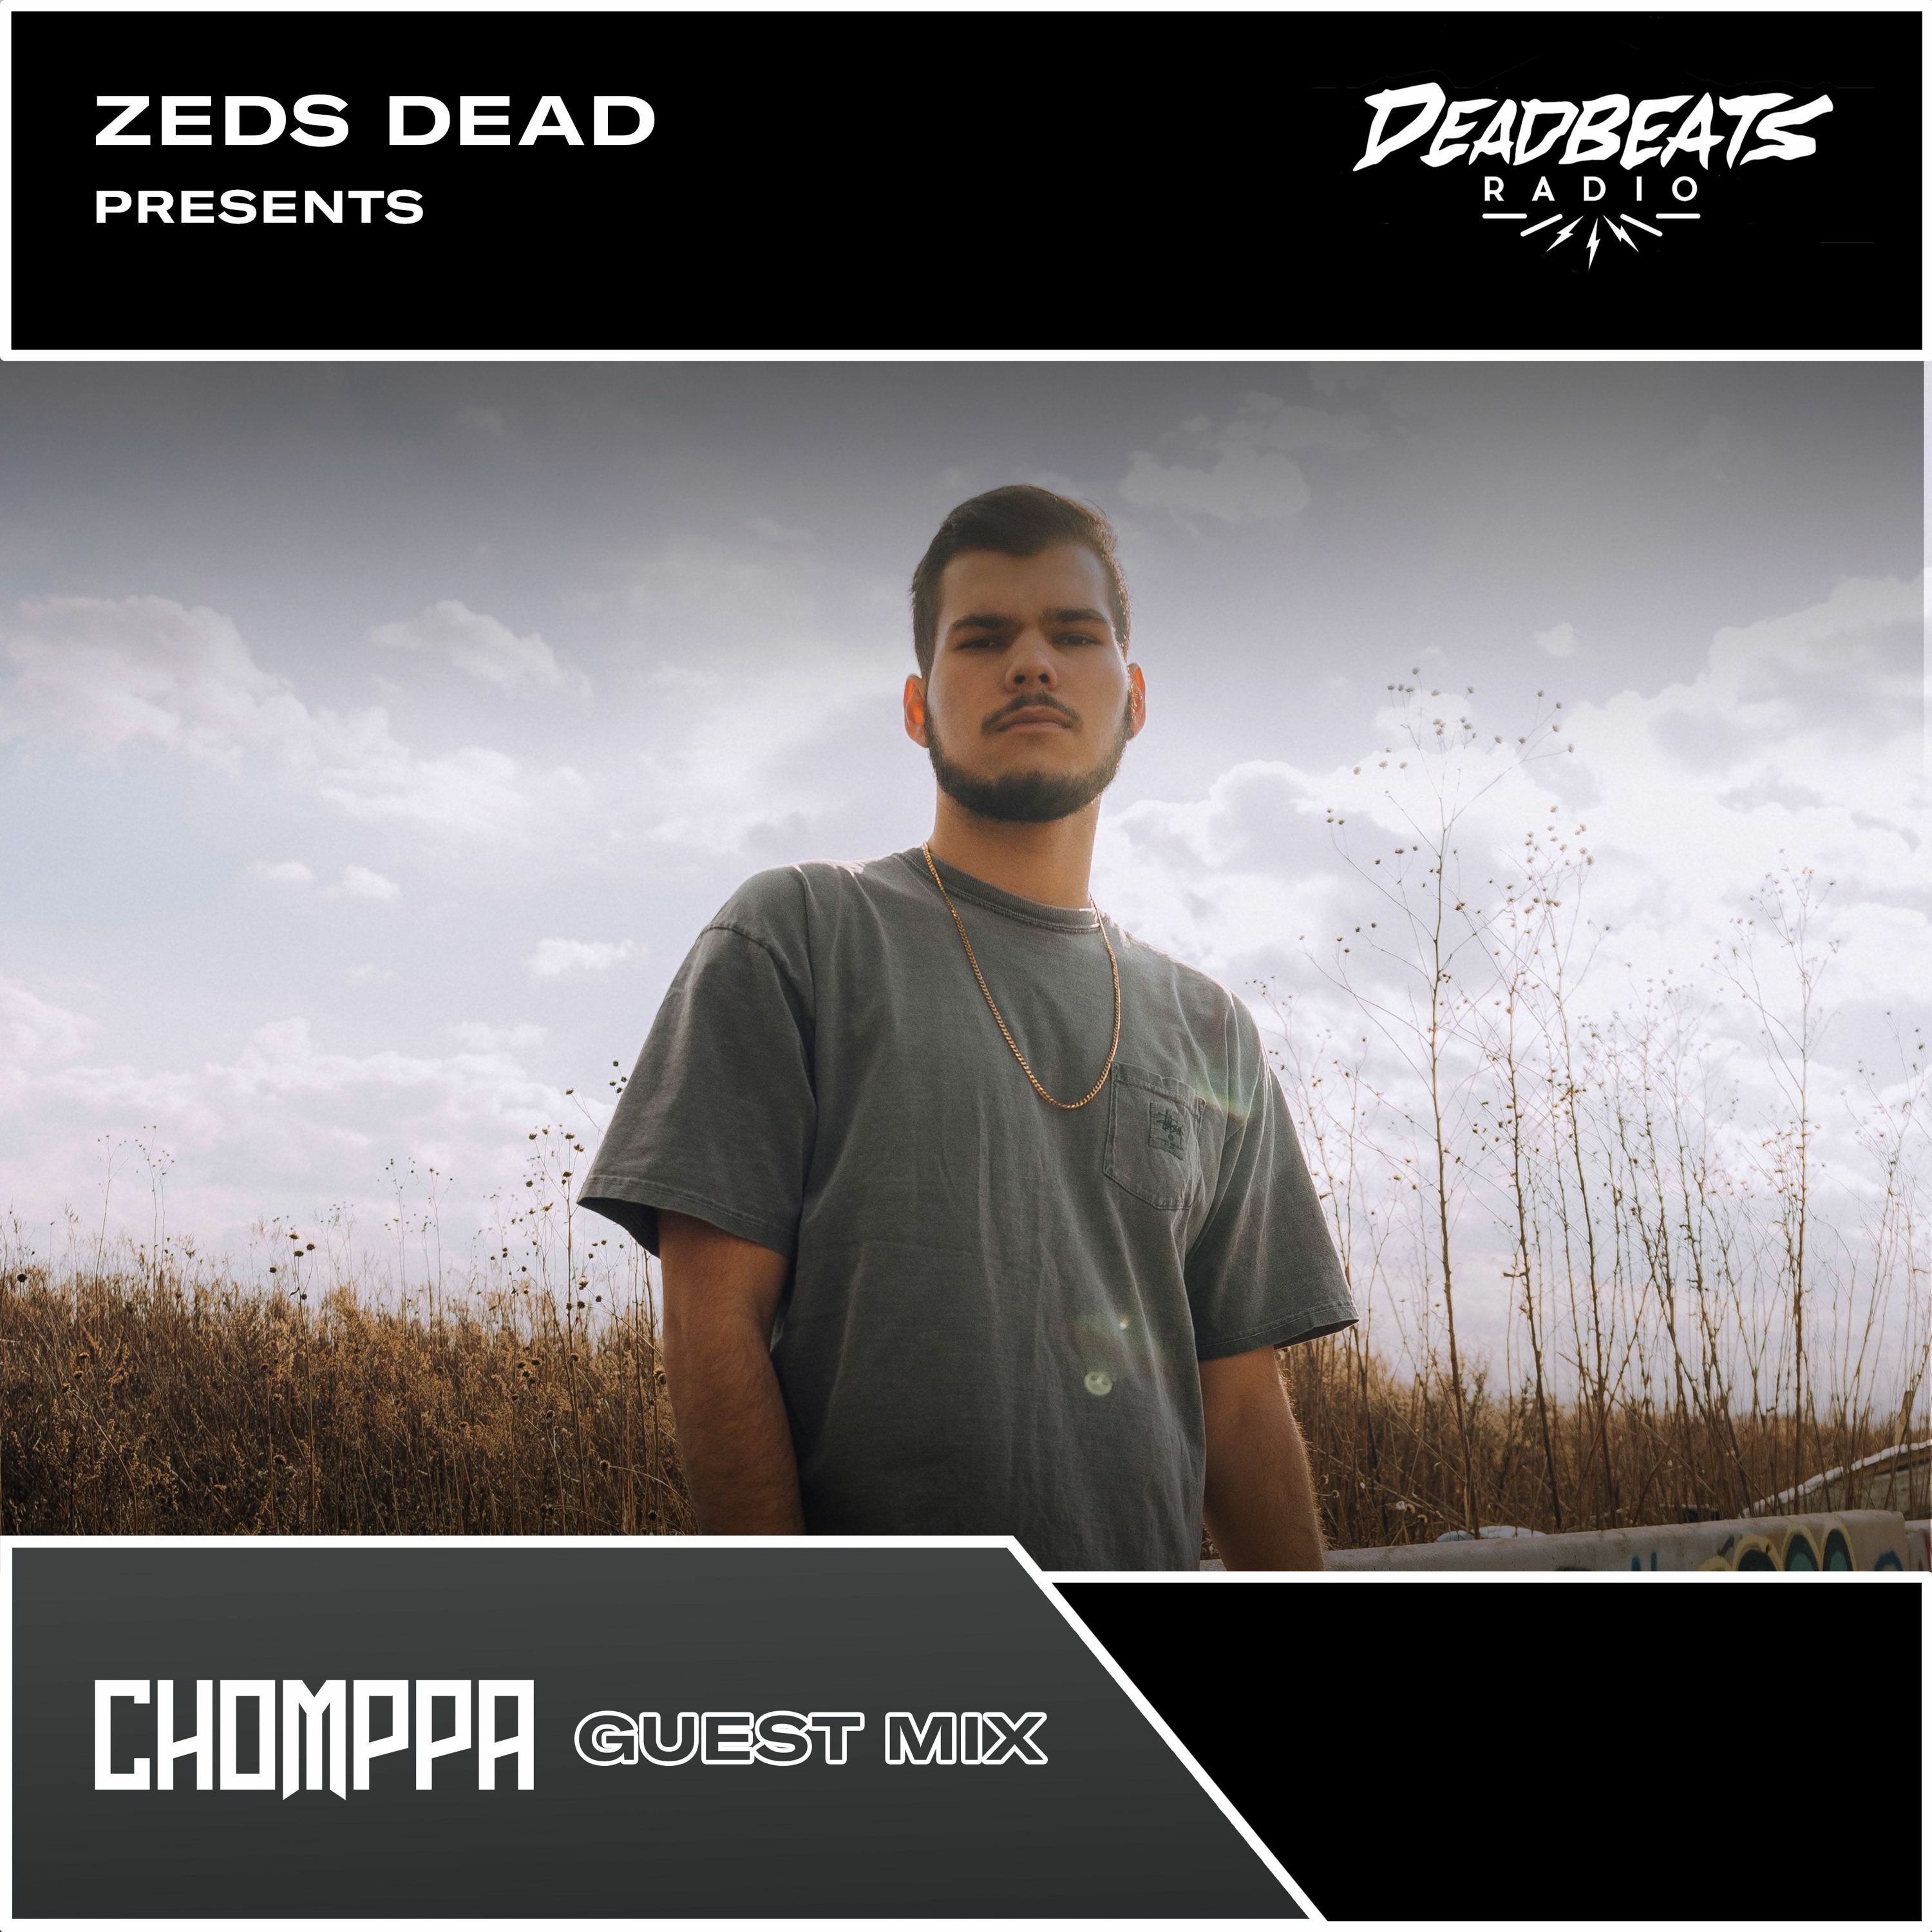 #203 Deadbeats Radio with Zeds Dead // CHOMPPA Guestmix